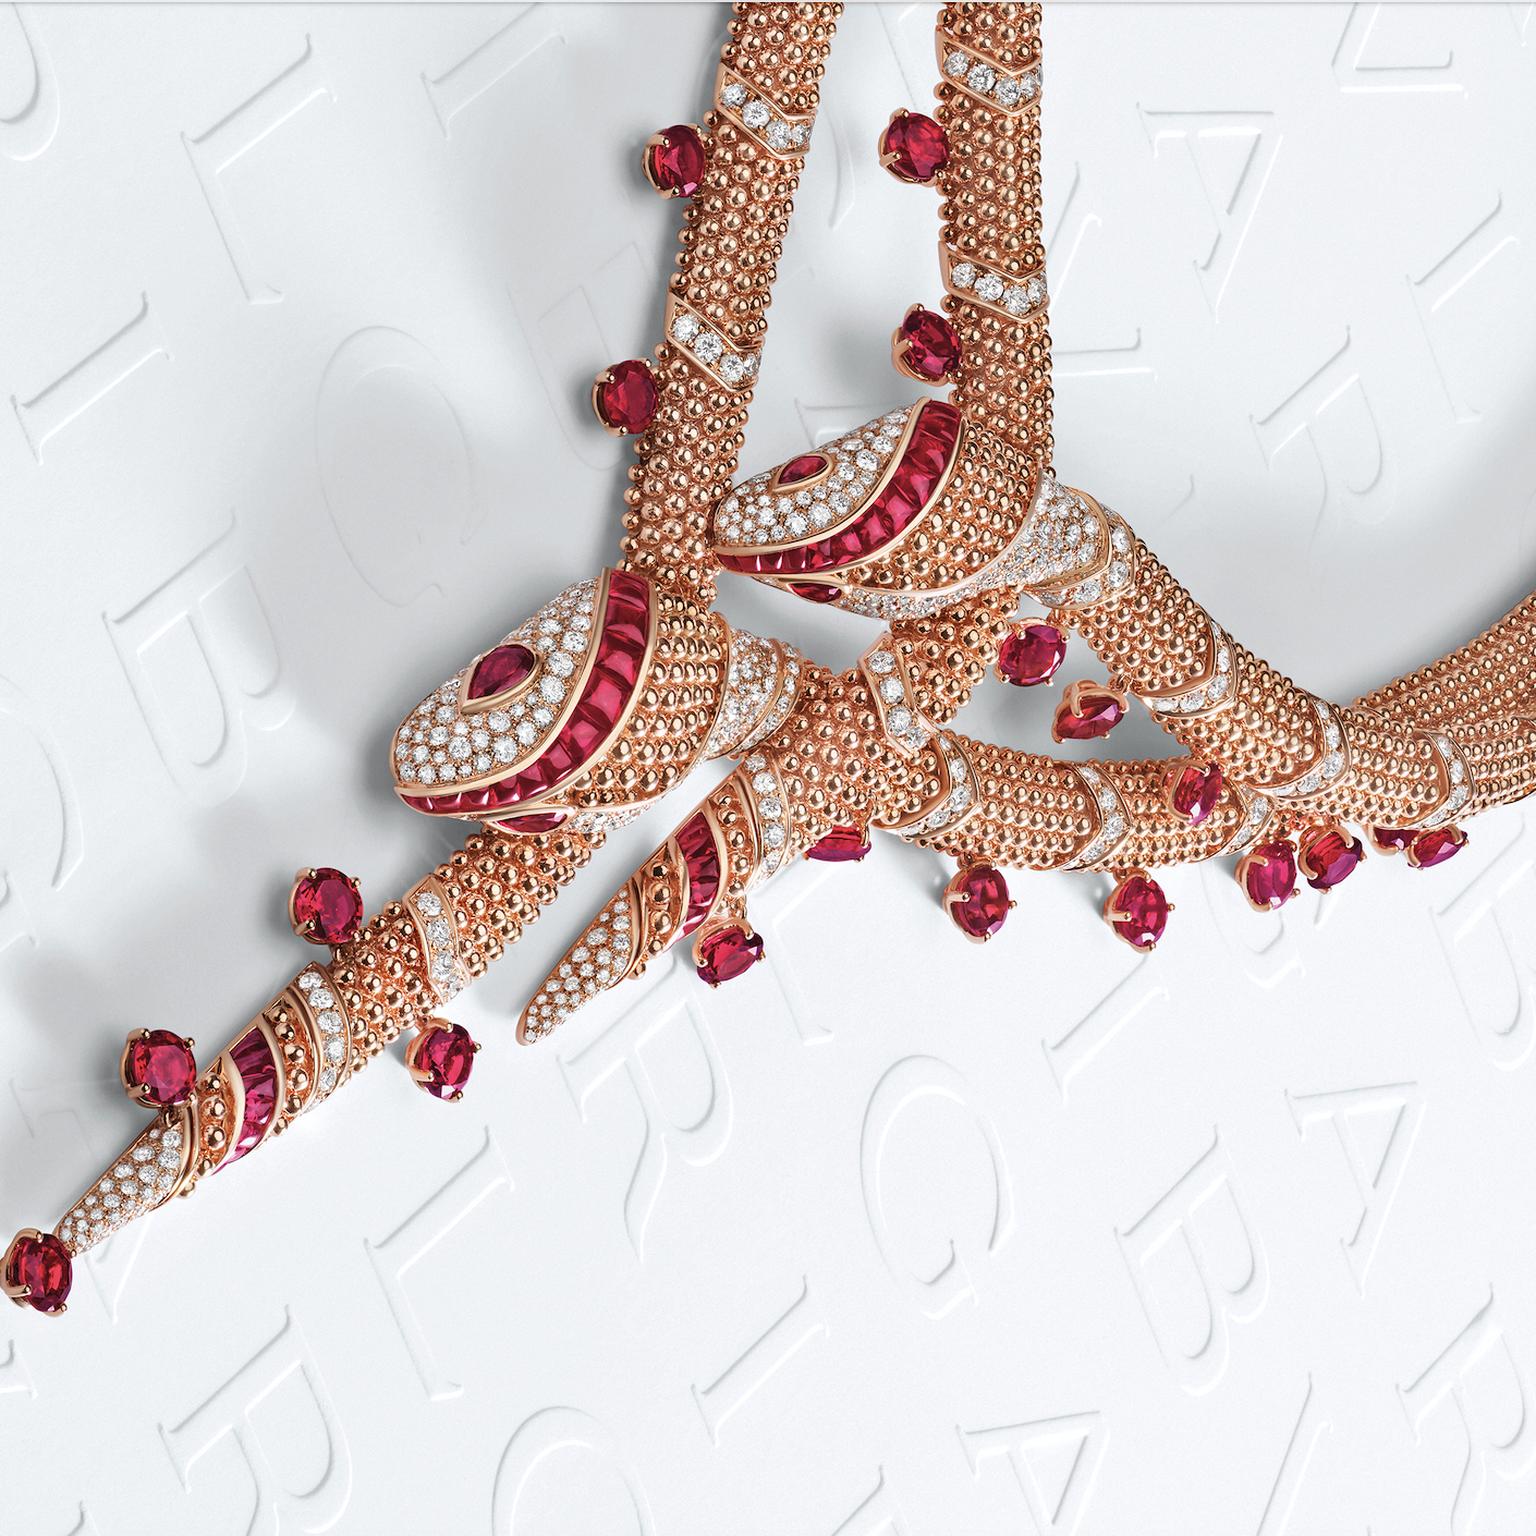 Ruby and diamond Serpenti necklace by Bulgari 